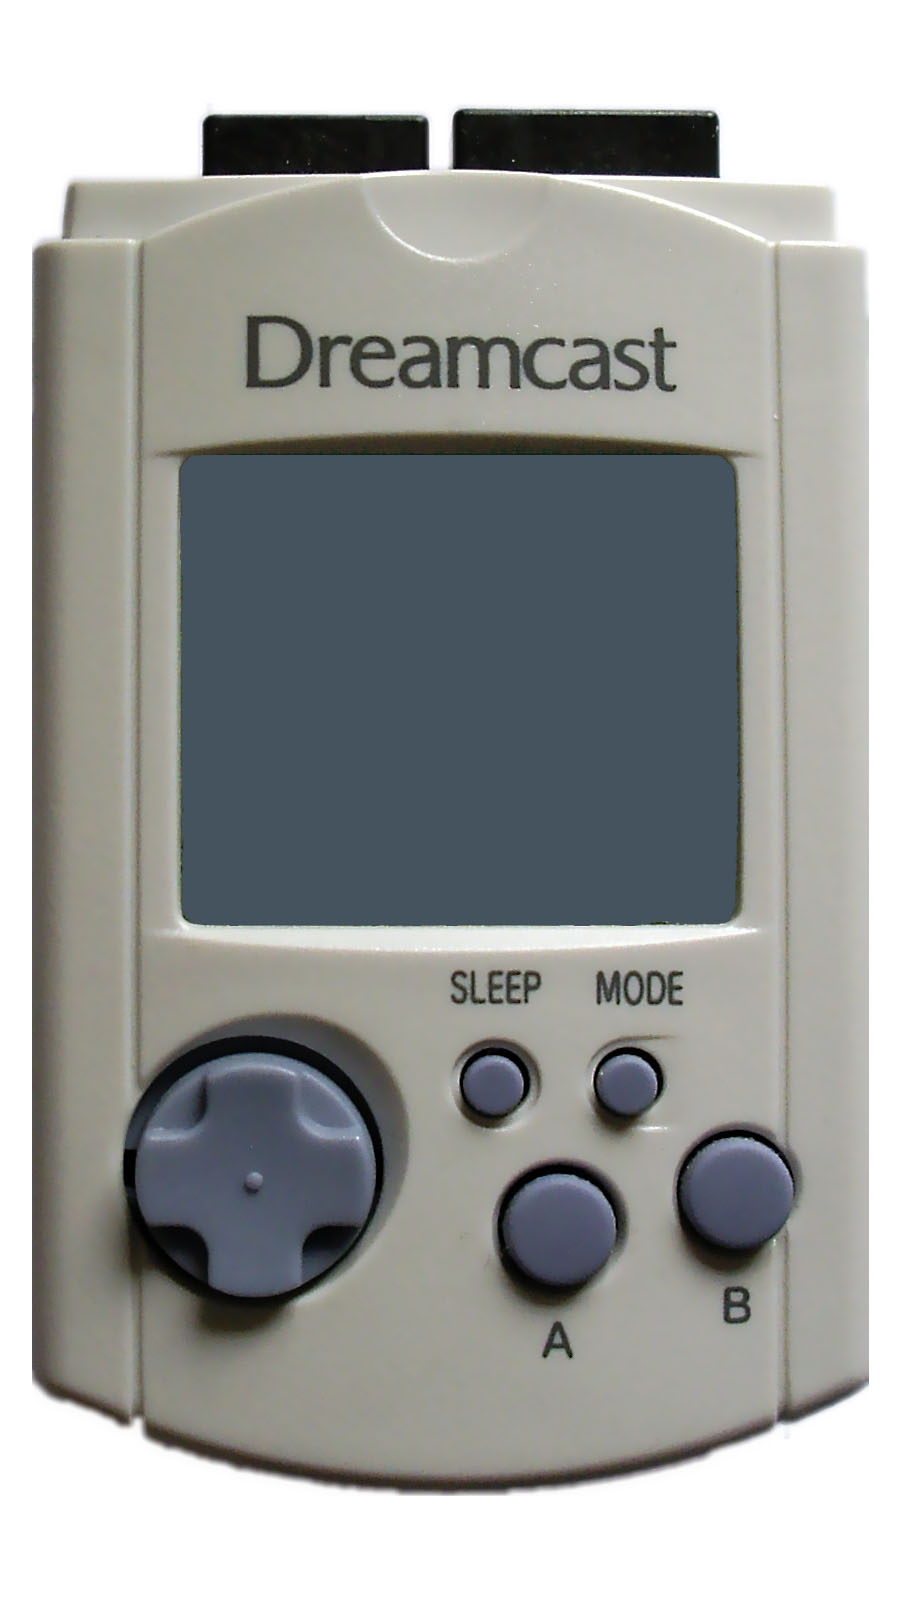 What Dreamcast Games Have Vmu Mini-Games